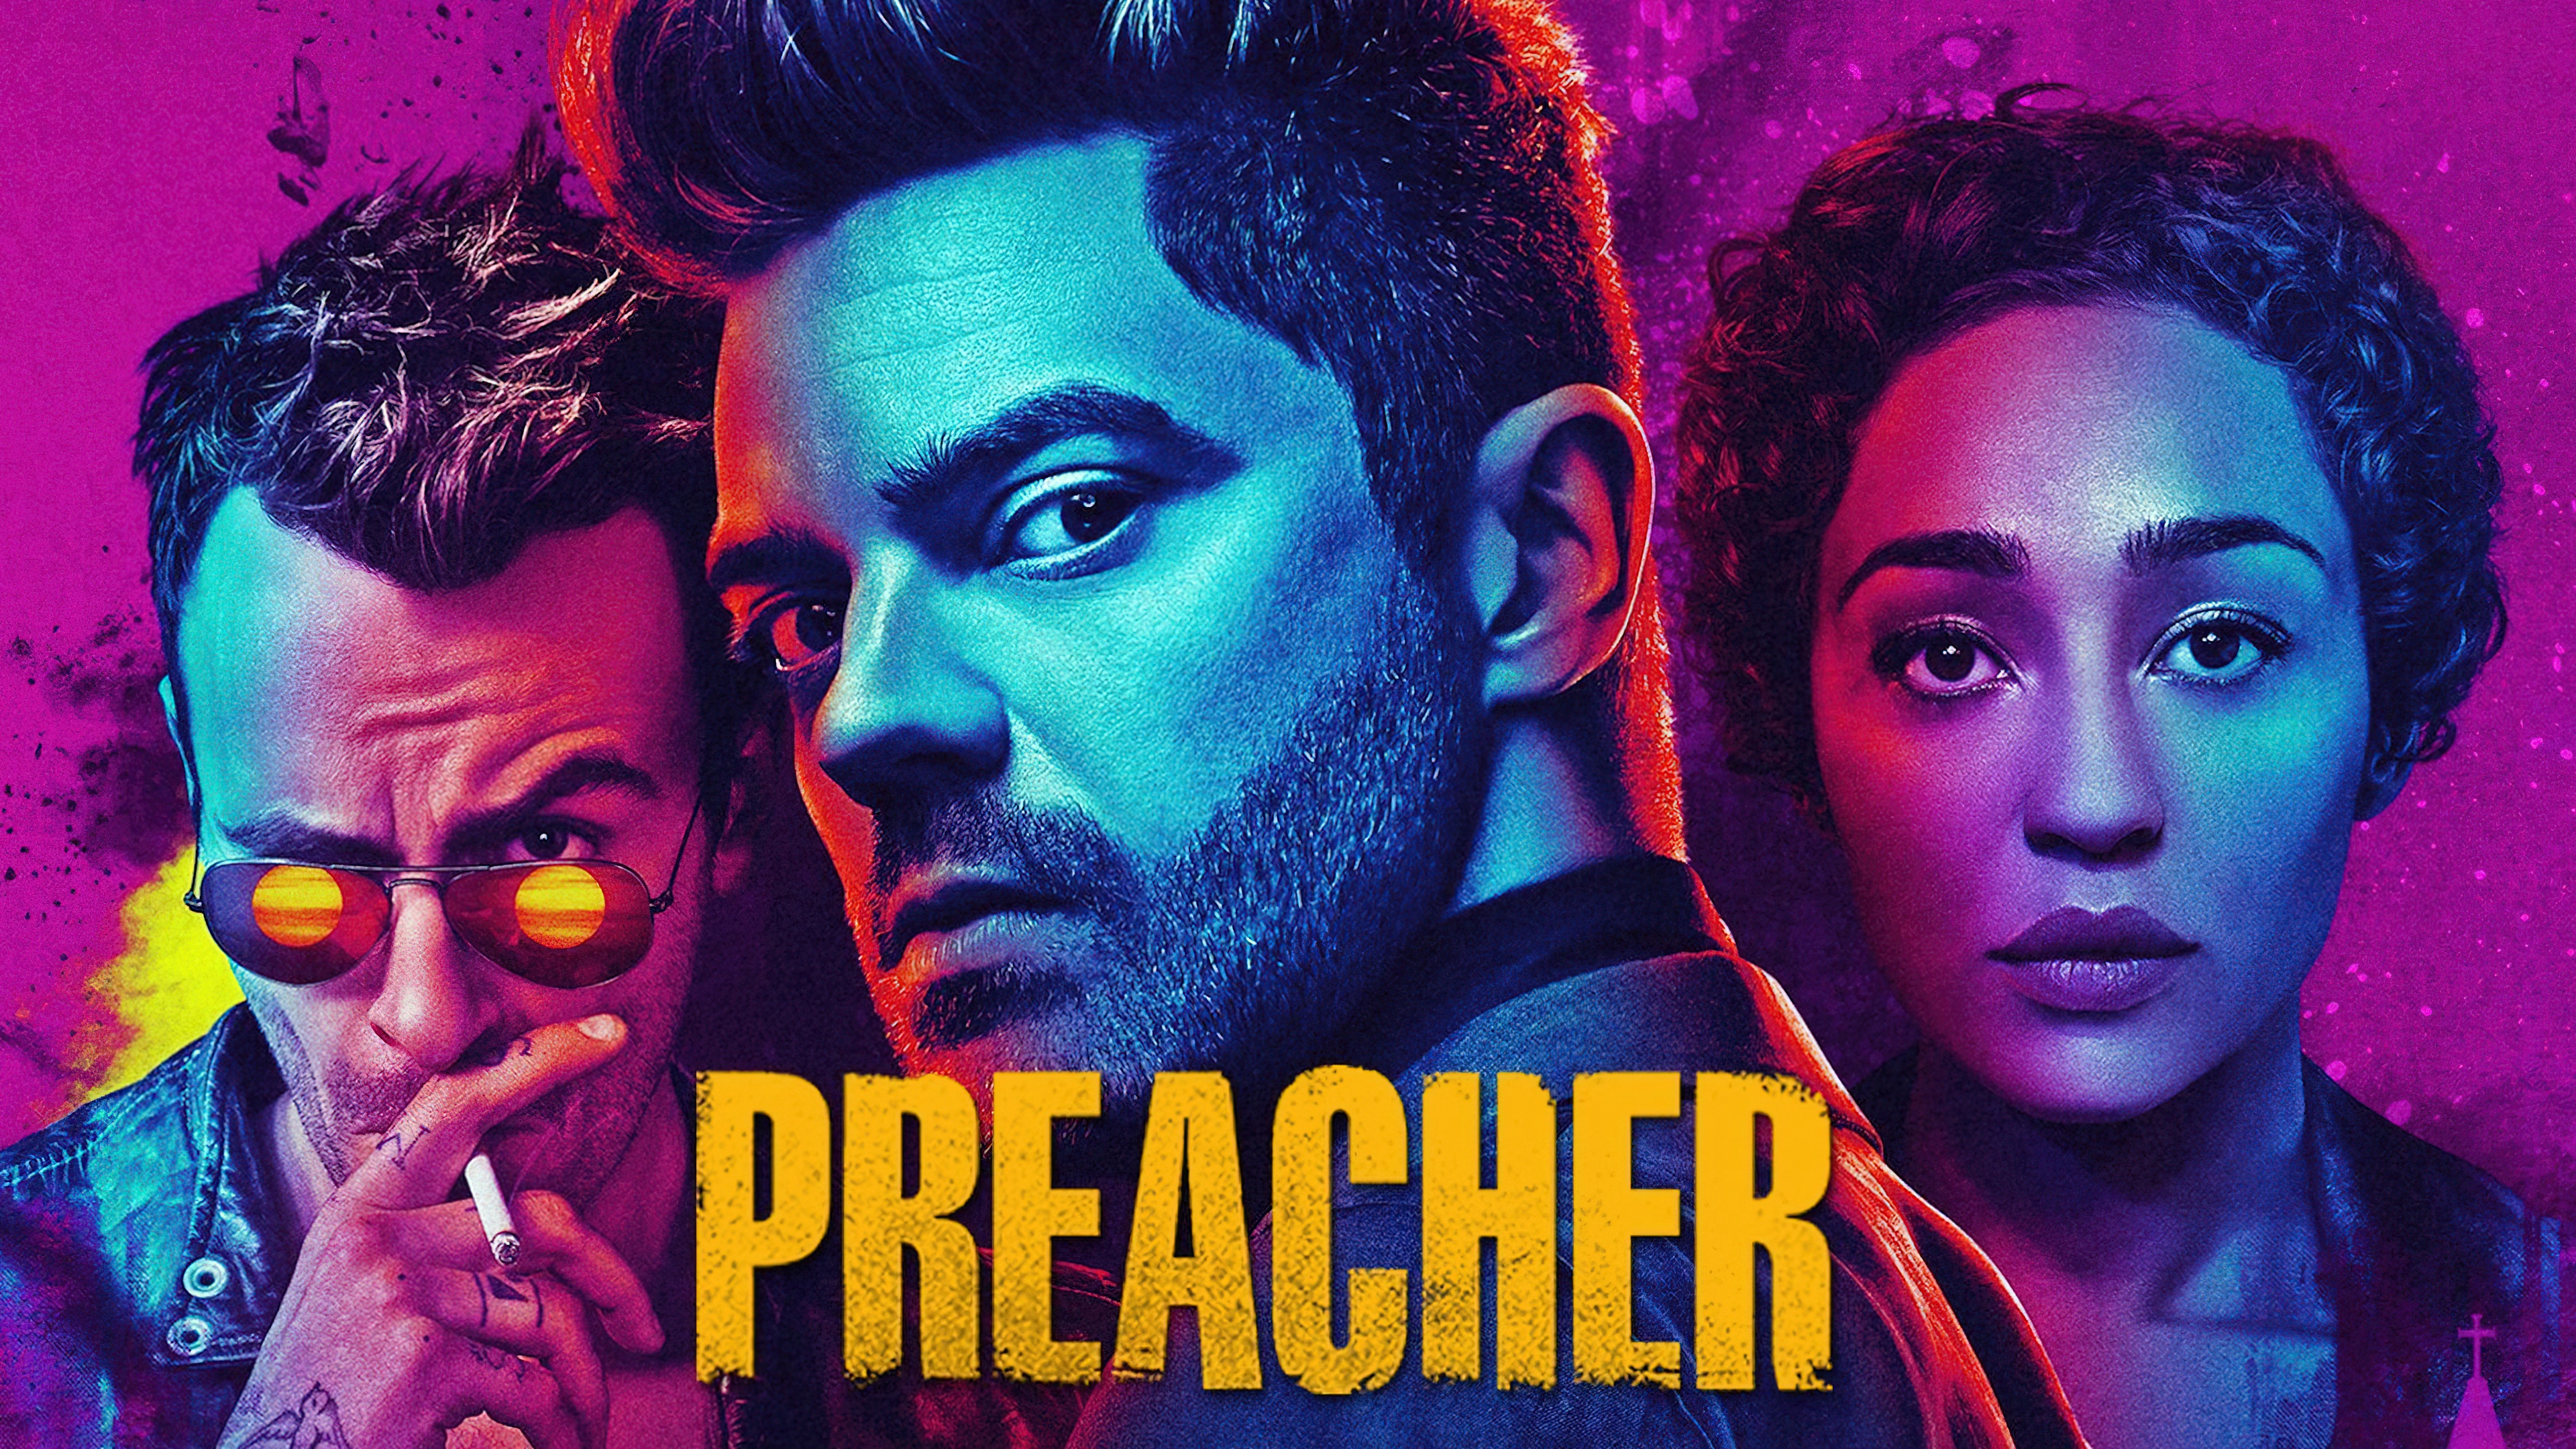 Preacher Season 3 (2019) [พากย์ไทย]